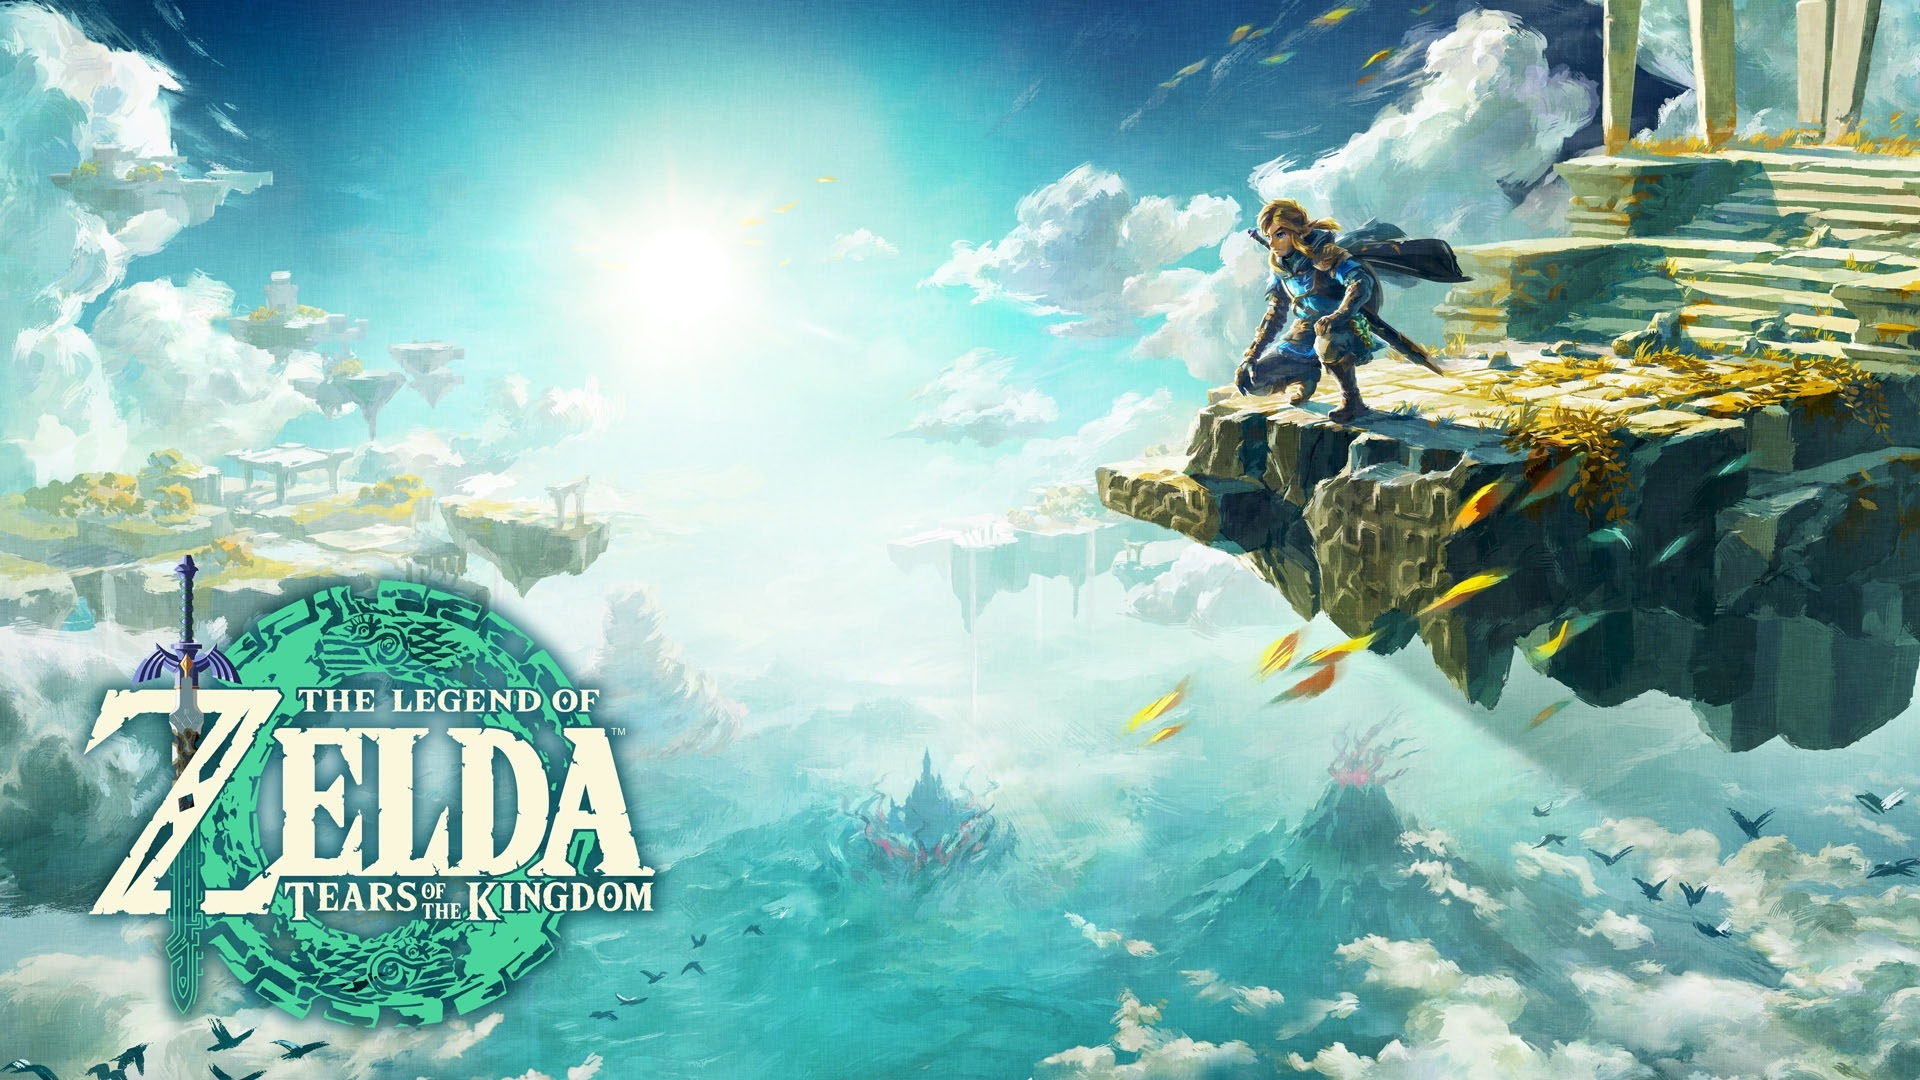 The Legend of Zelda: Seni kunci Air Mata Kerajaan